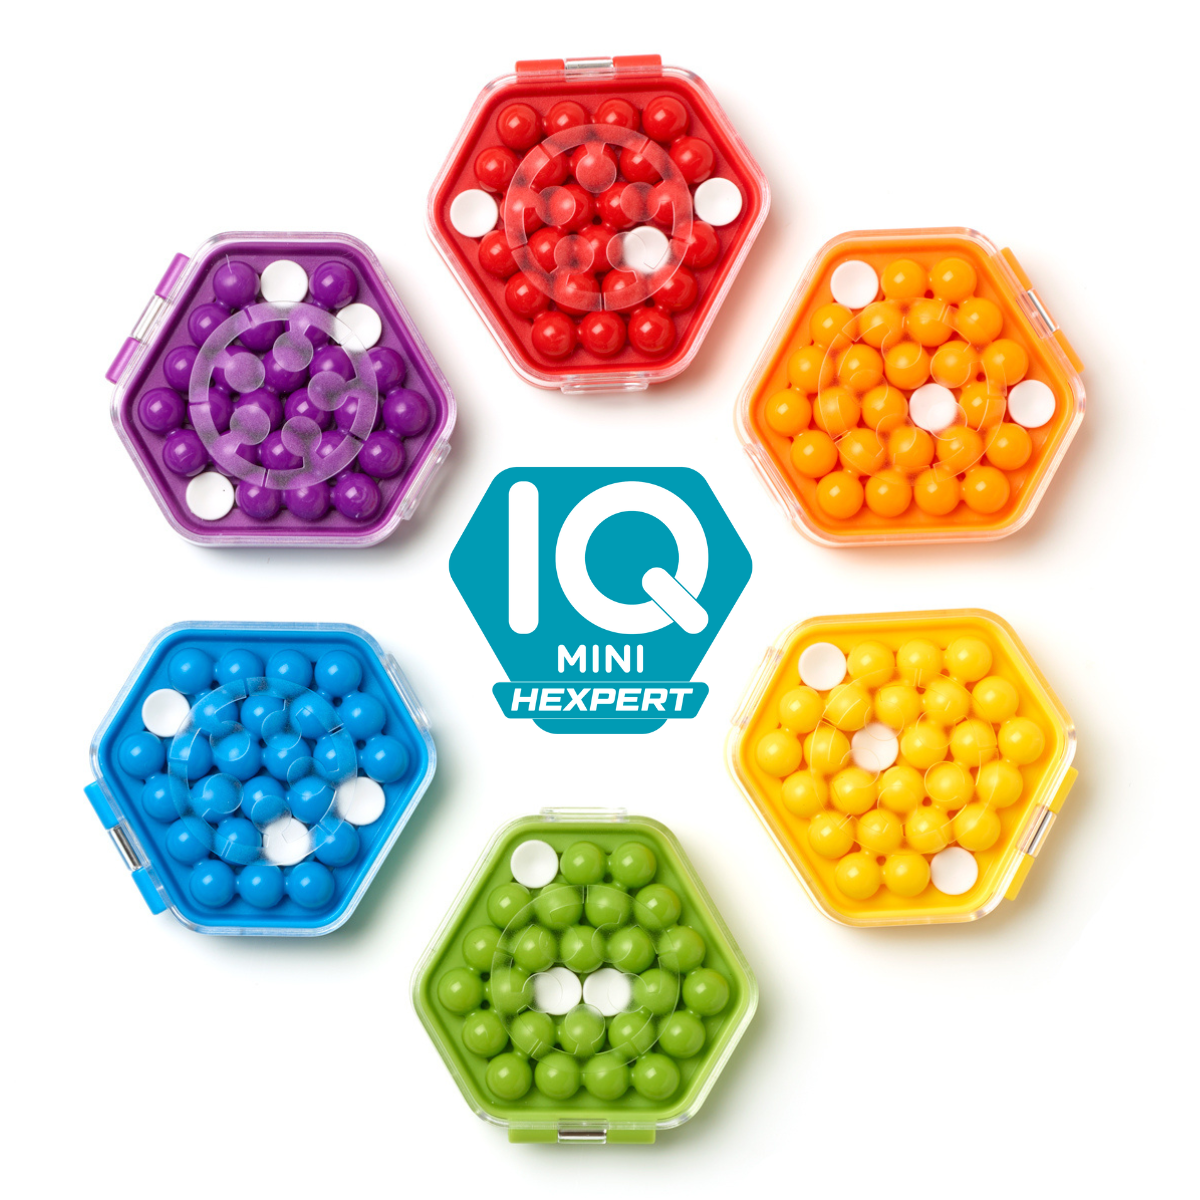 IUVI -Spiele: IQ Mini Hexpert Smart Games IQ Puzzle Game